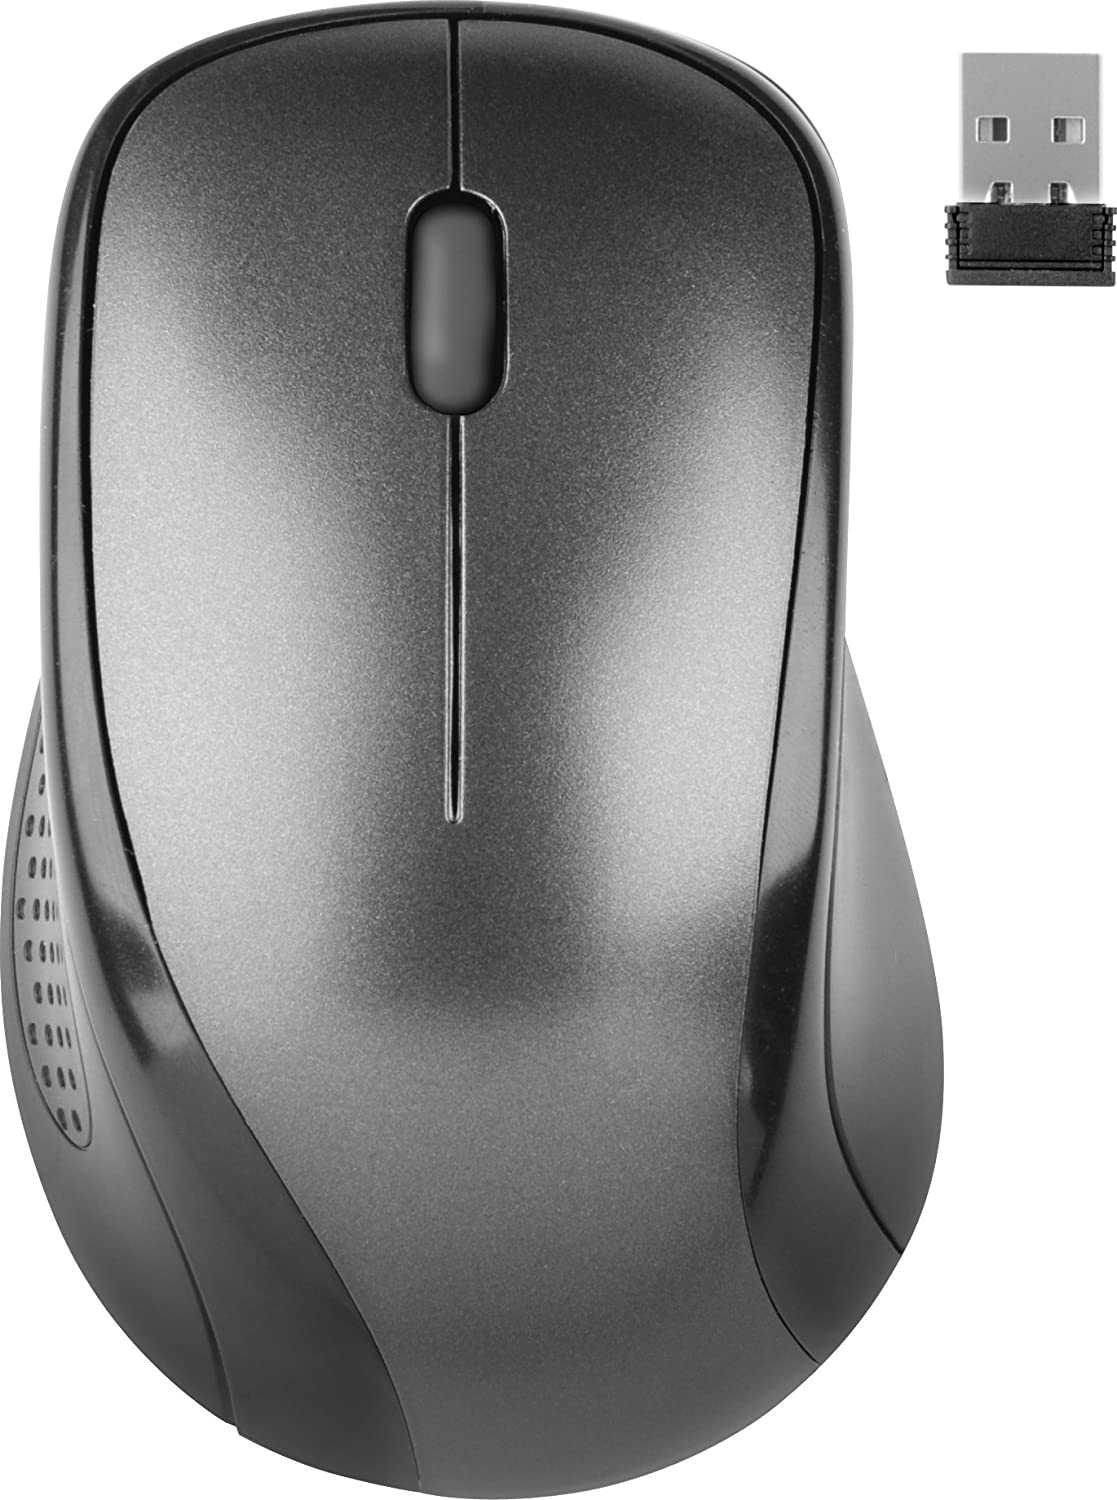 Speedlink kappa mouse wireless black usb